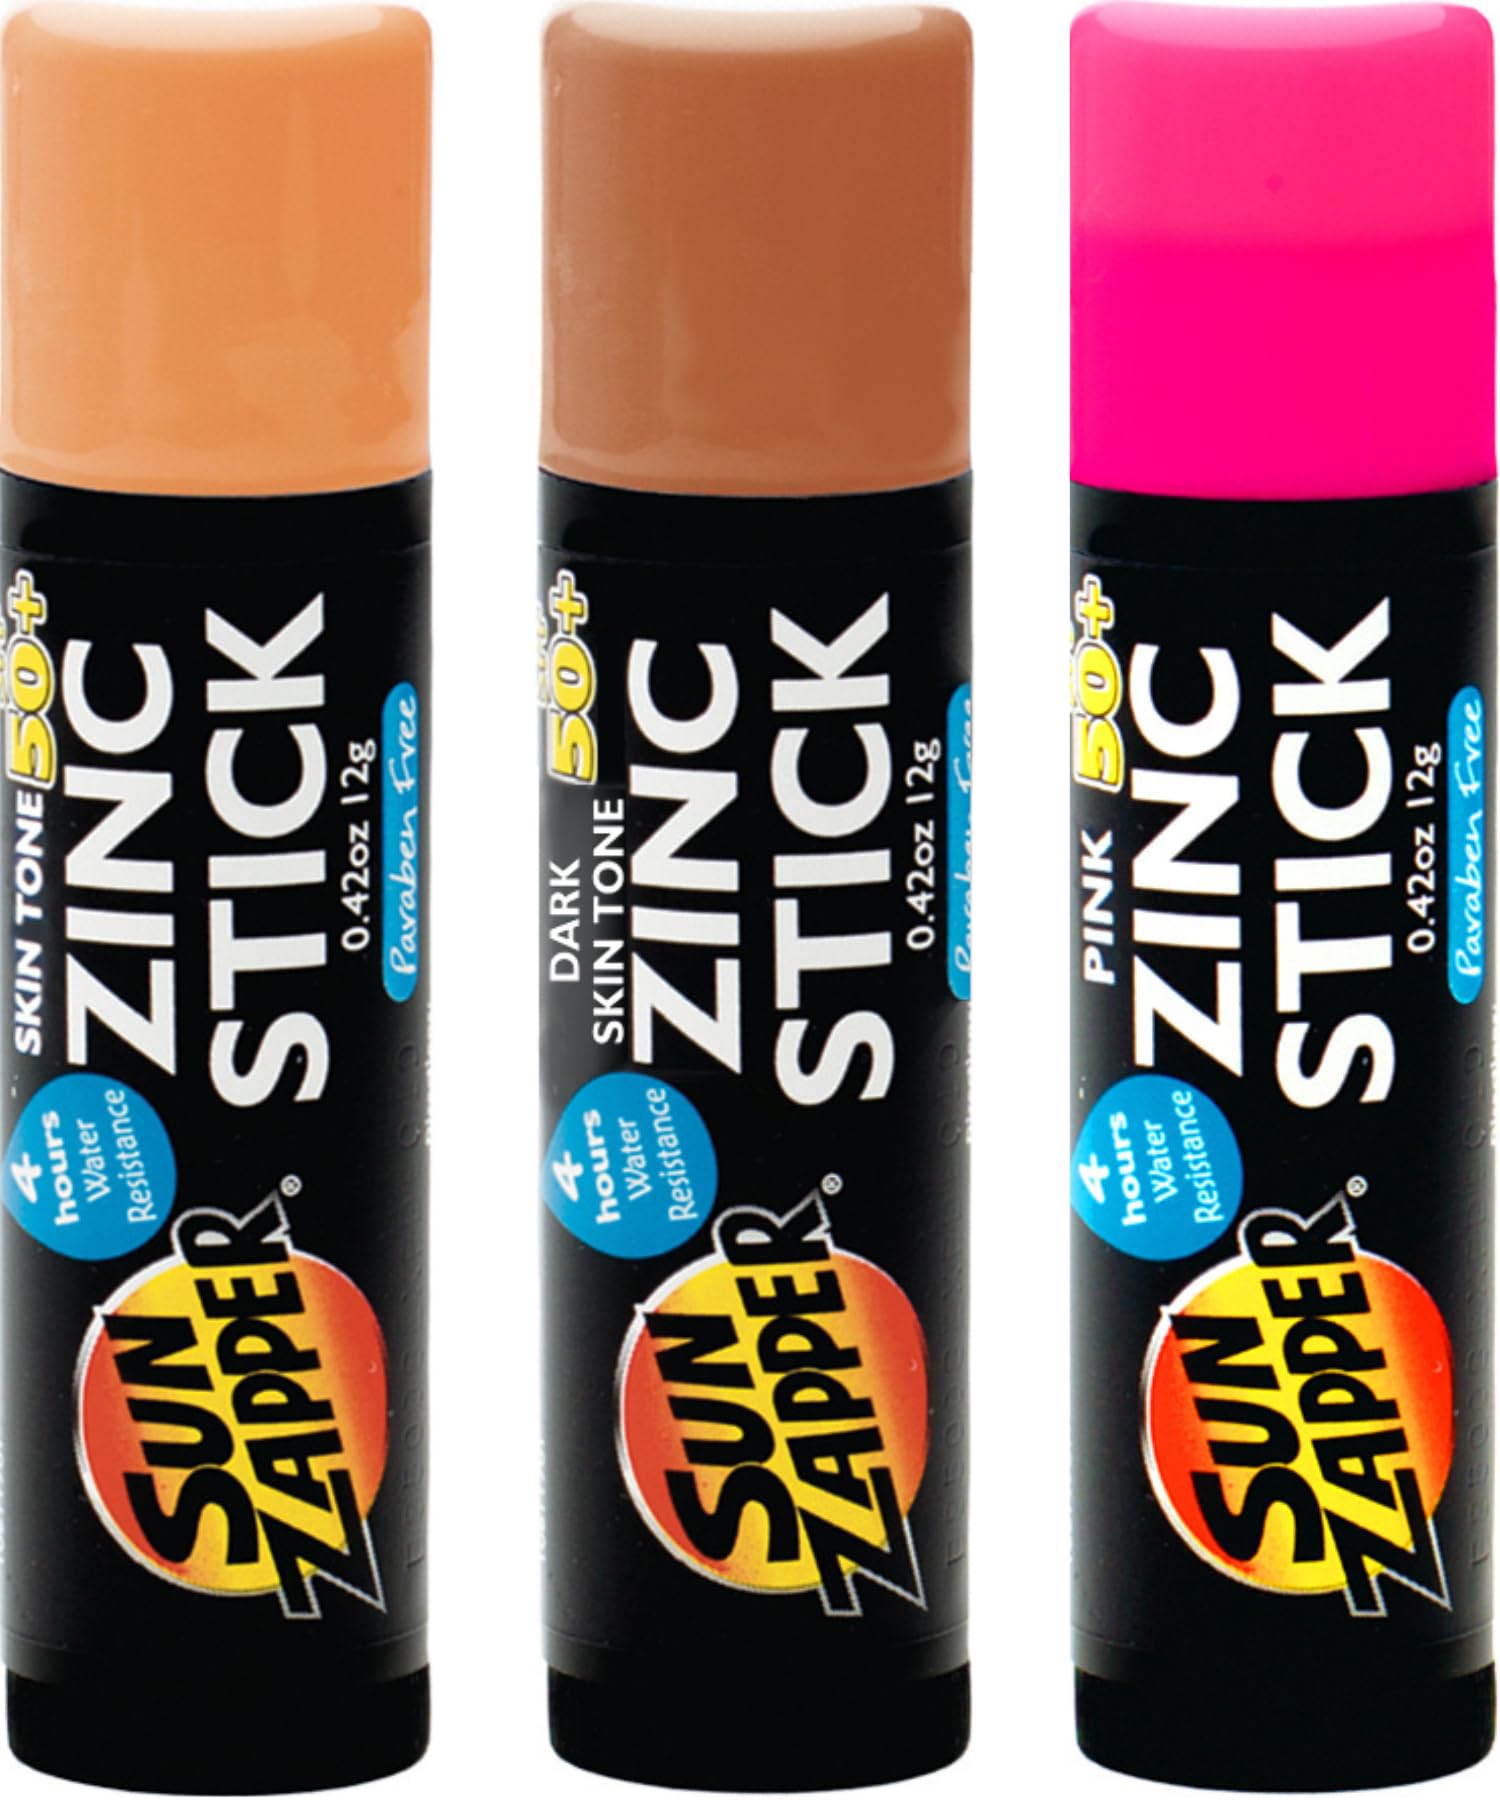 Sun Zapper Beauty Pack - Light Skin Tone, Dark Skin Tone, Pink (3 Pack) - SPF 50+ Zinc Oxide Sunscreen Sticks